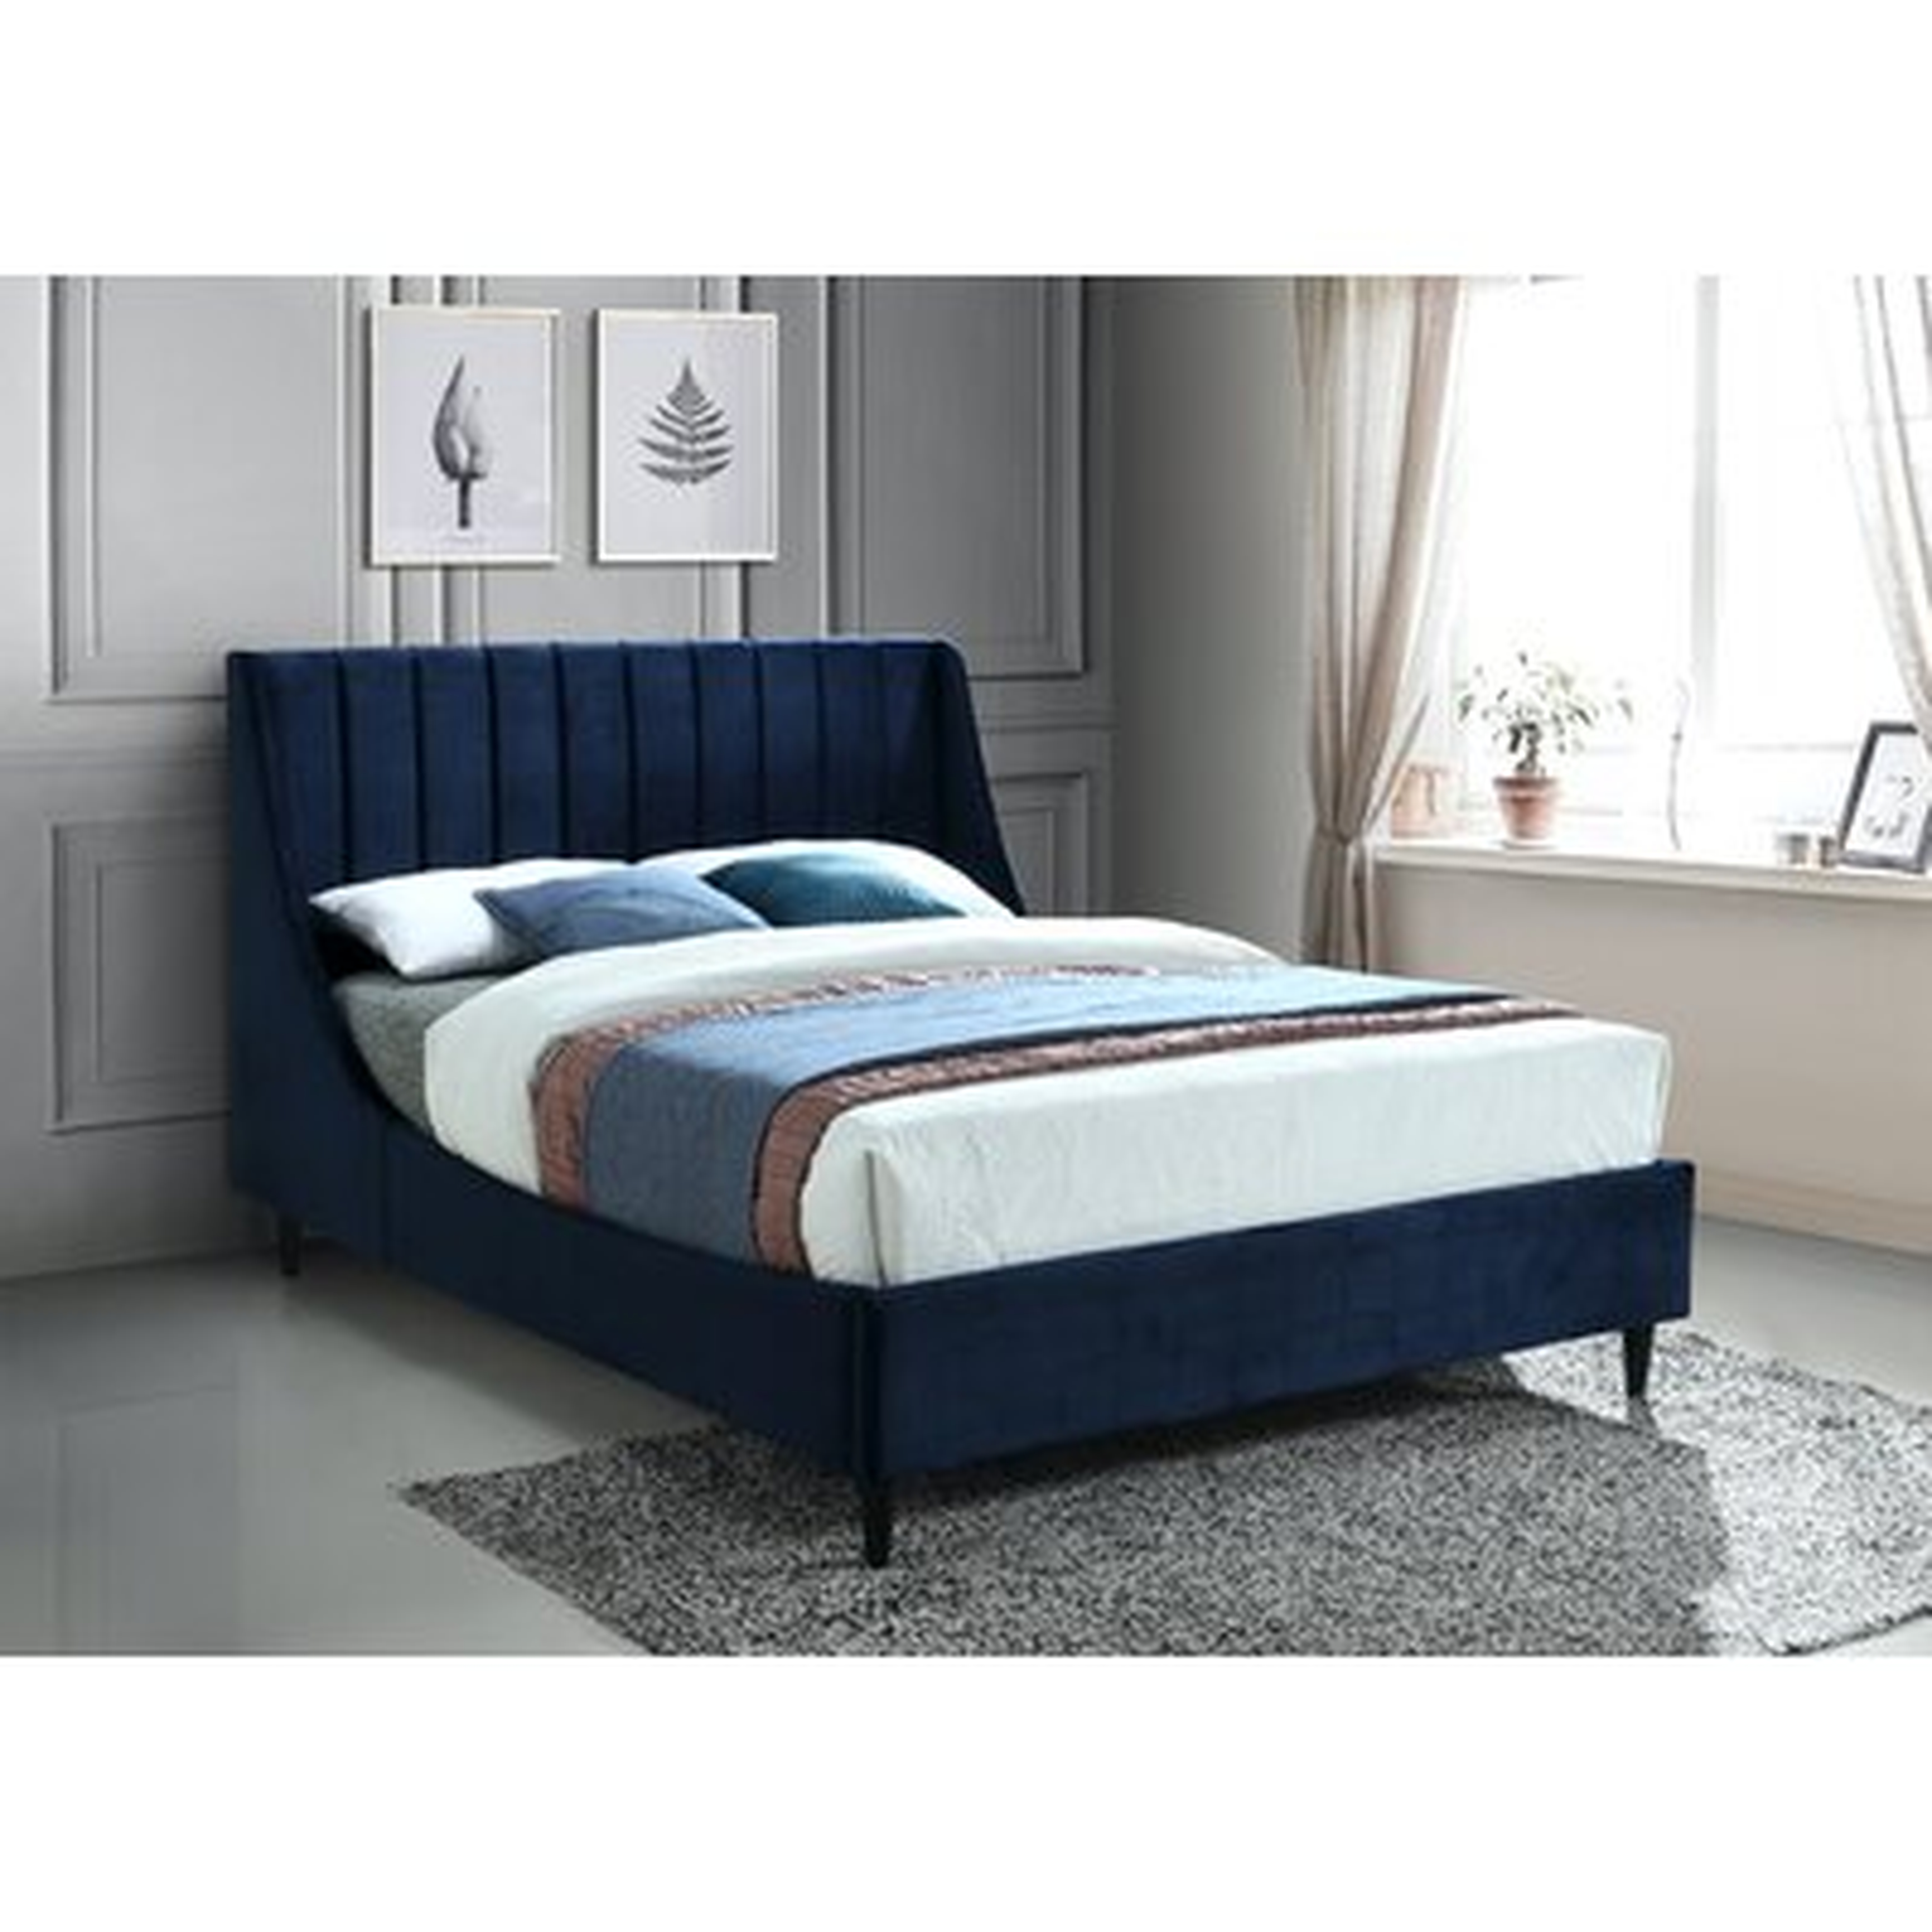 Bernan Upholstered Low Profile Platform Bed - Wayfair